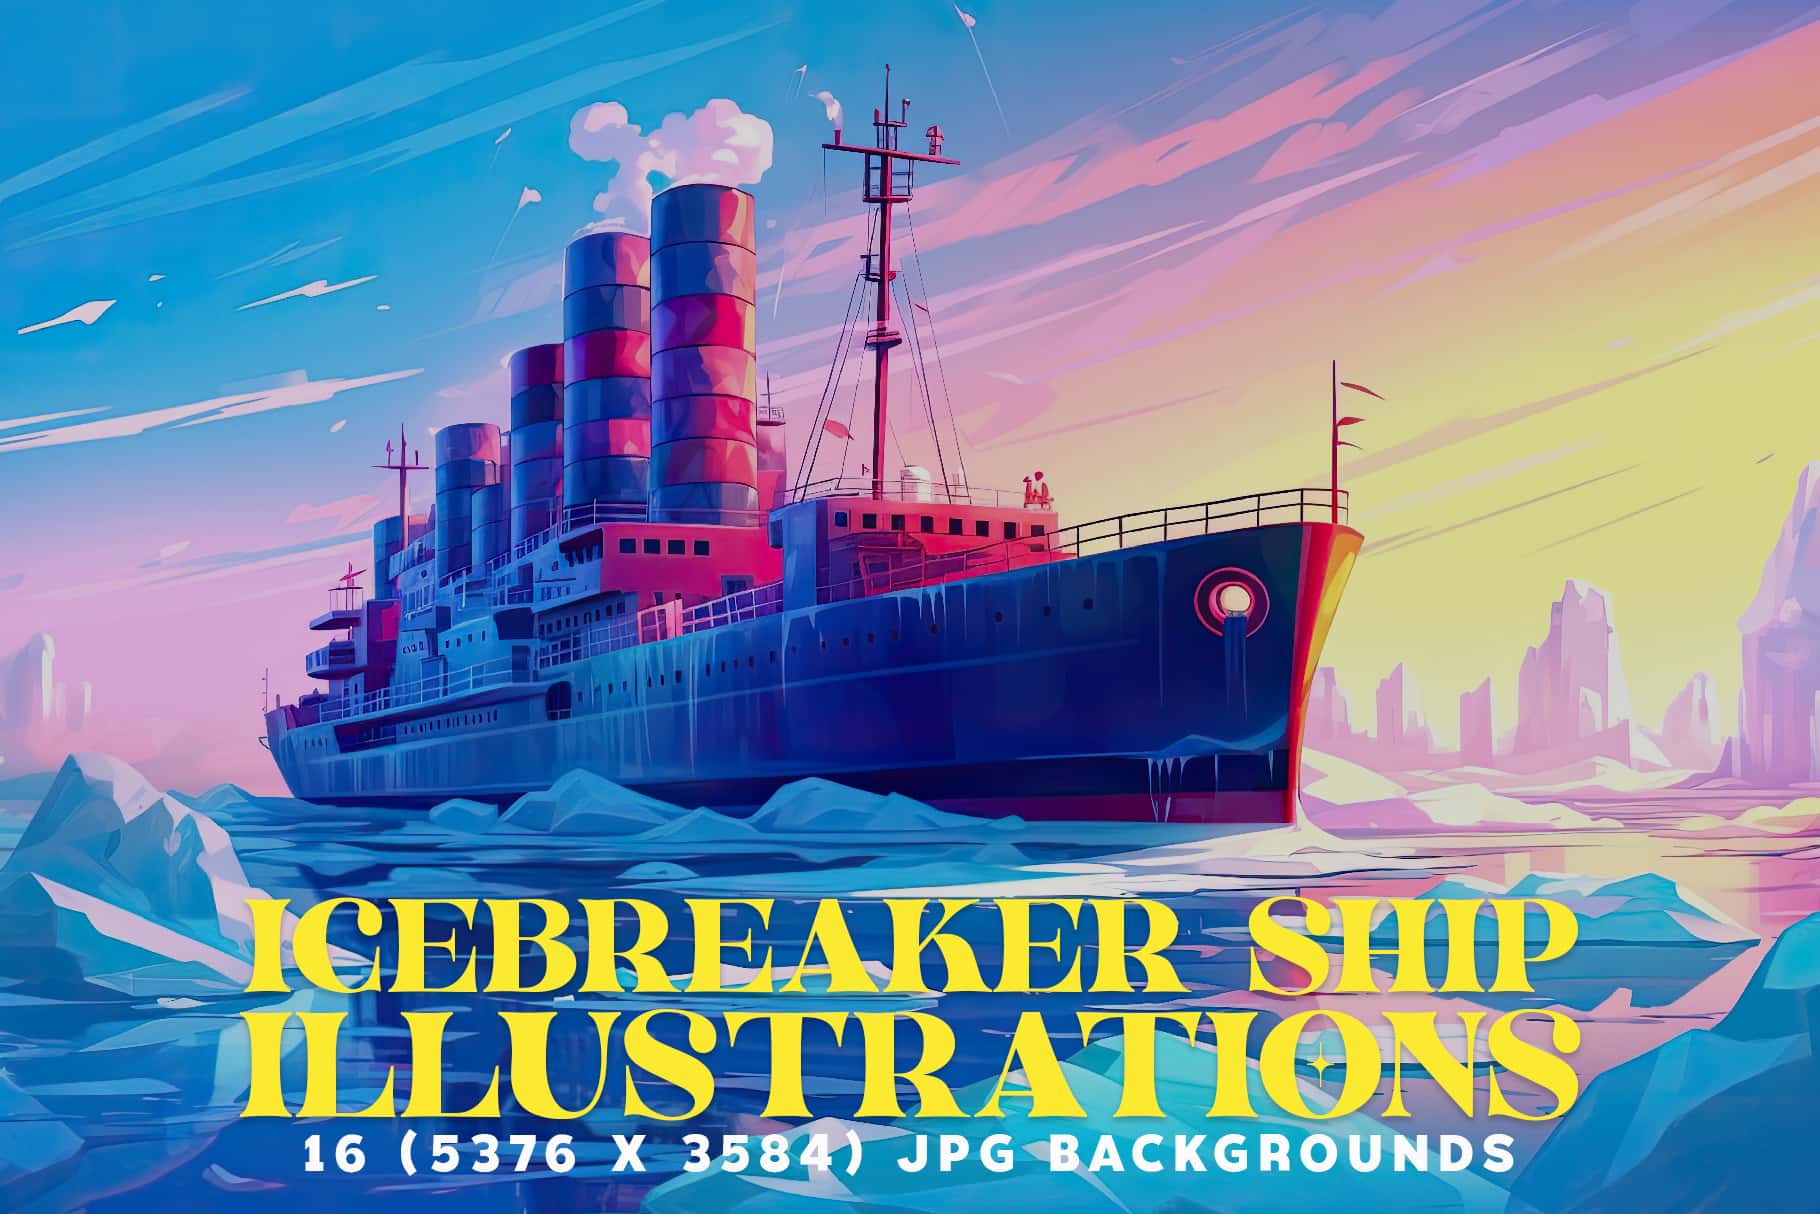 Icebreaker Ship Illustrations Cover